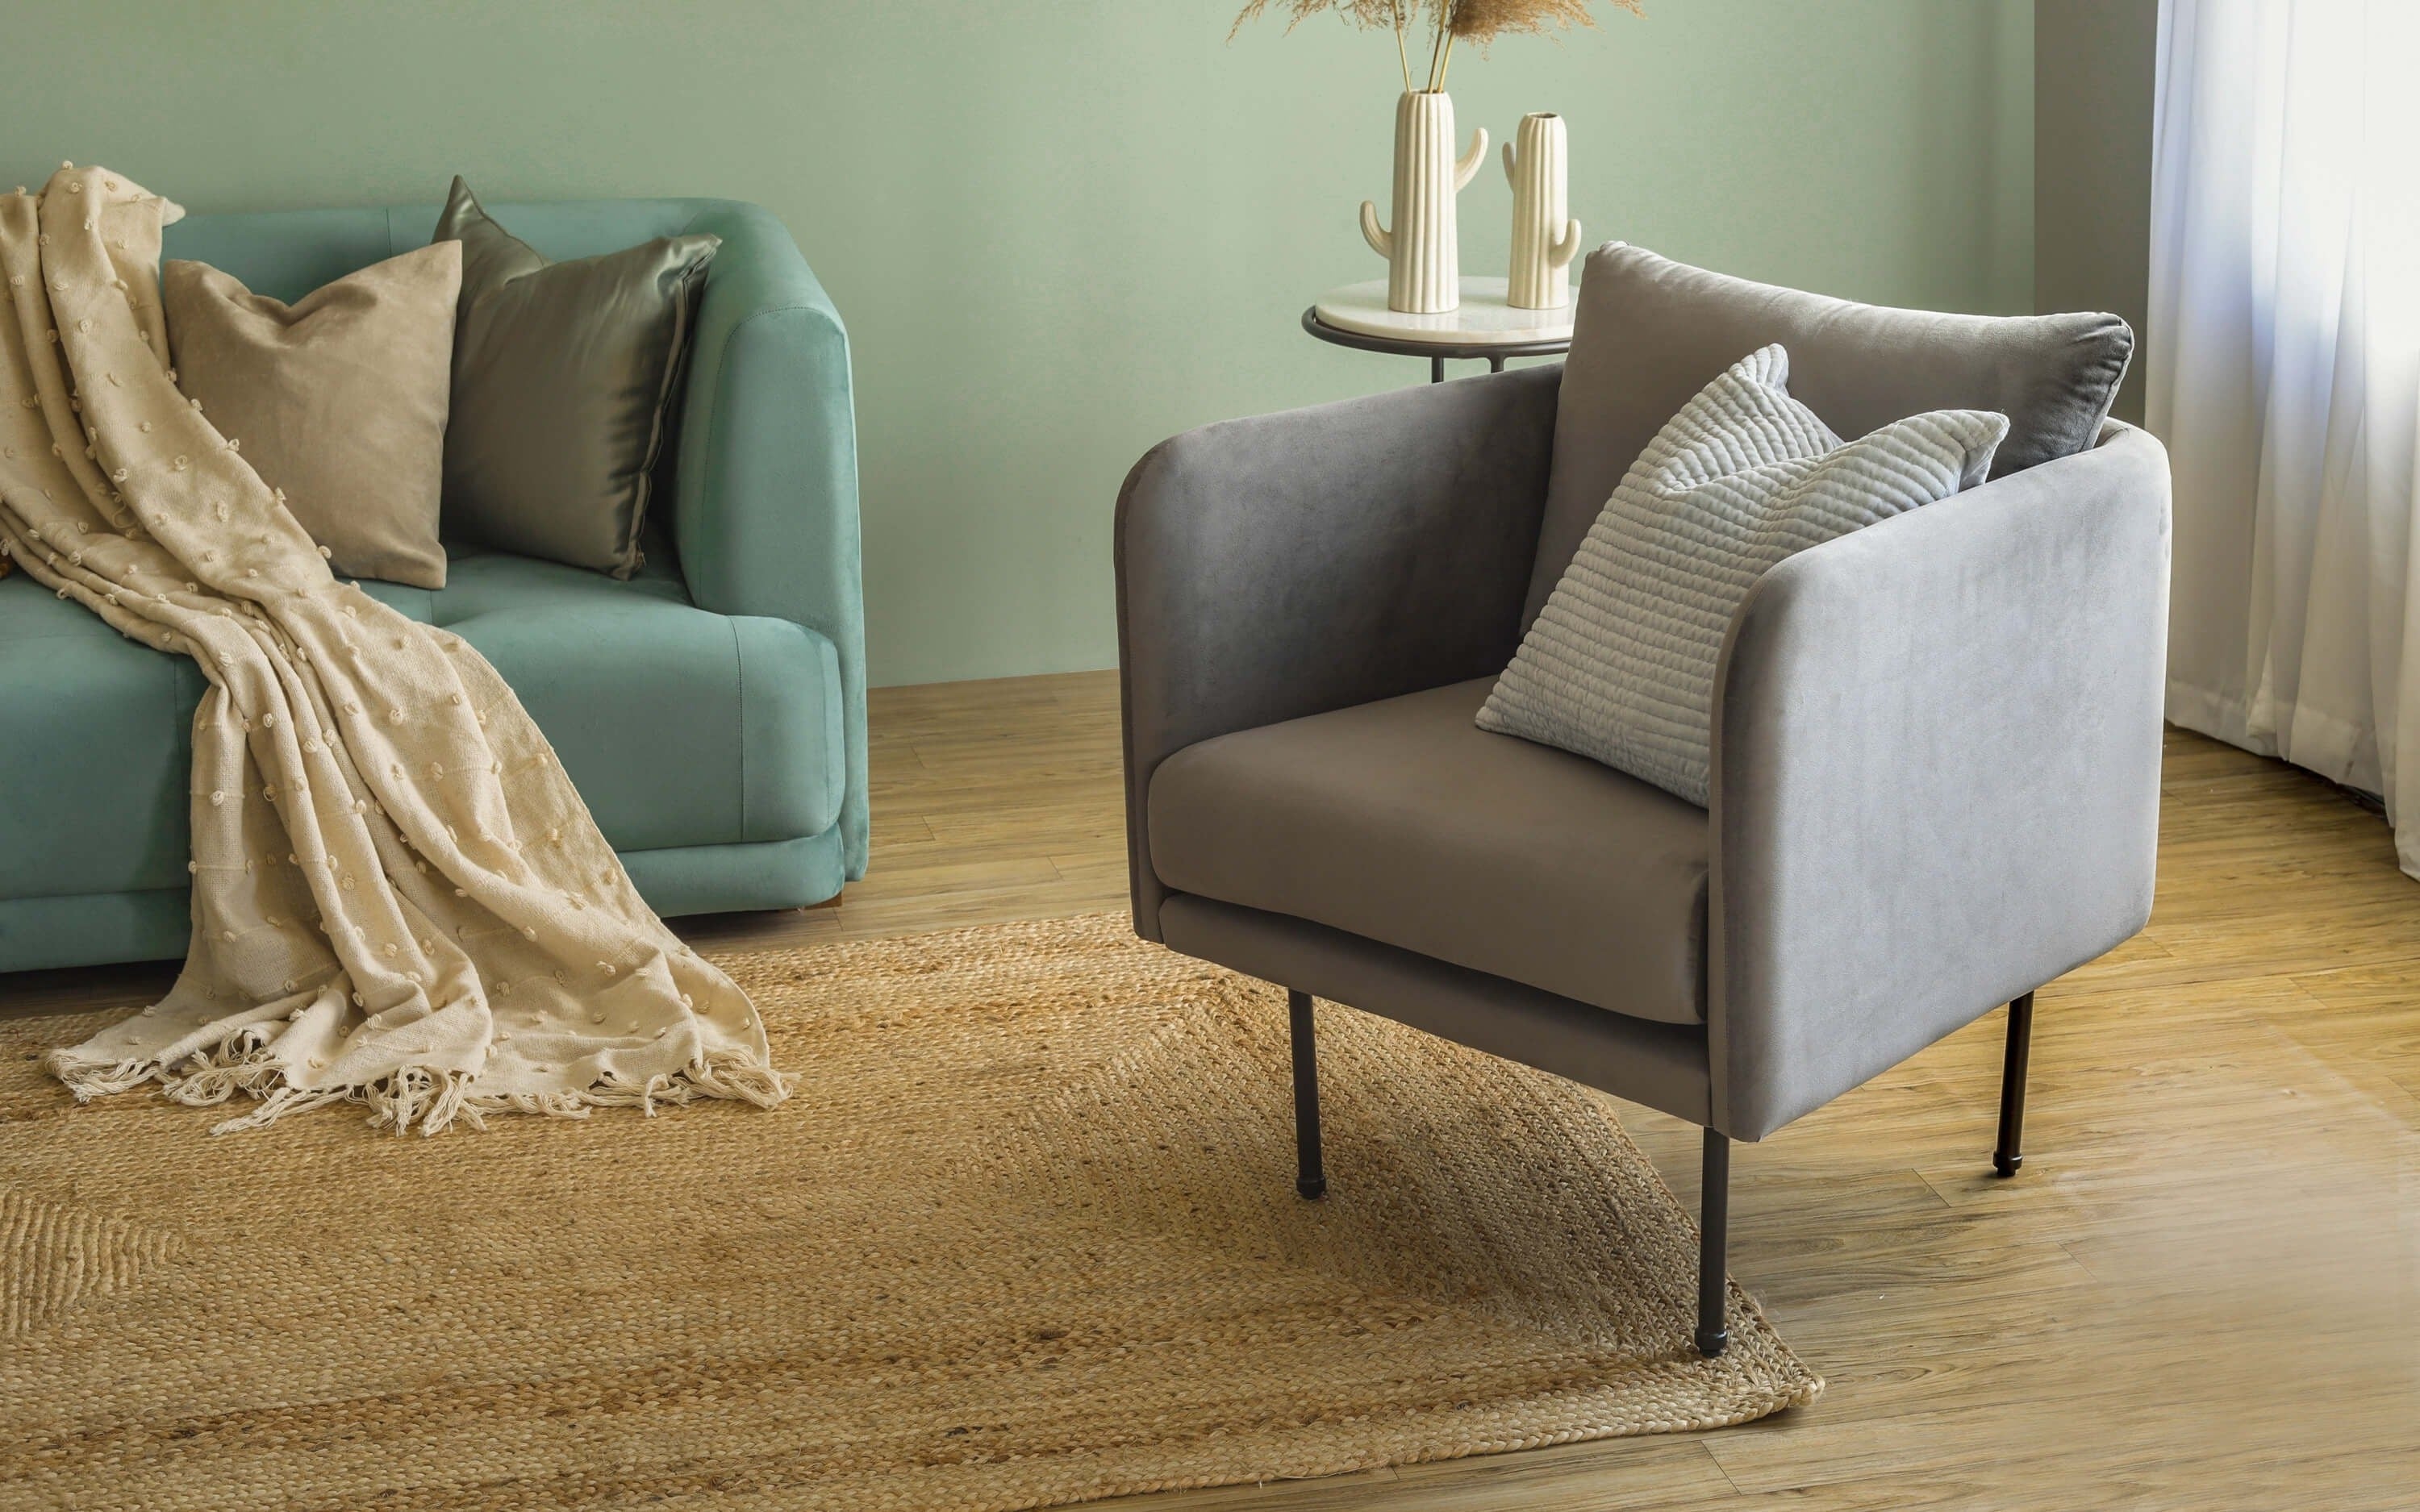 Daburu Grey Lounge Chair for bedroom. New home Decoration ideas 2023 - Orange Tree Homes Pvt Ltd.